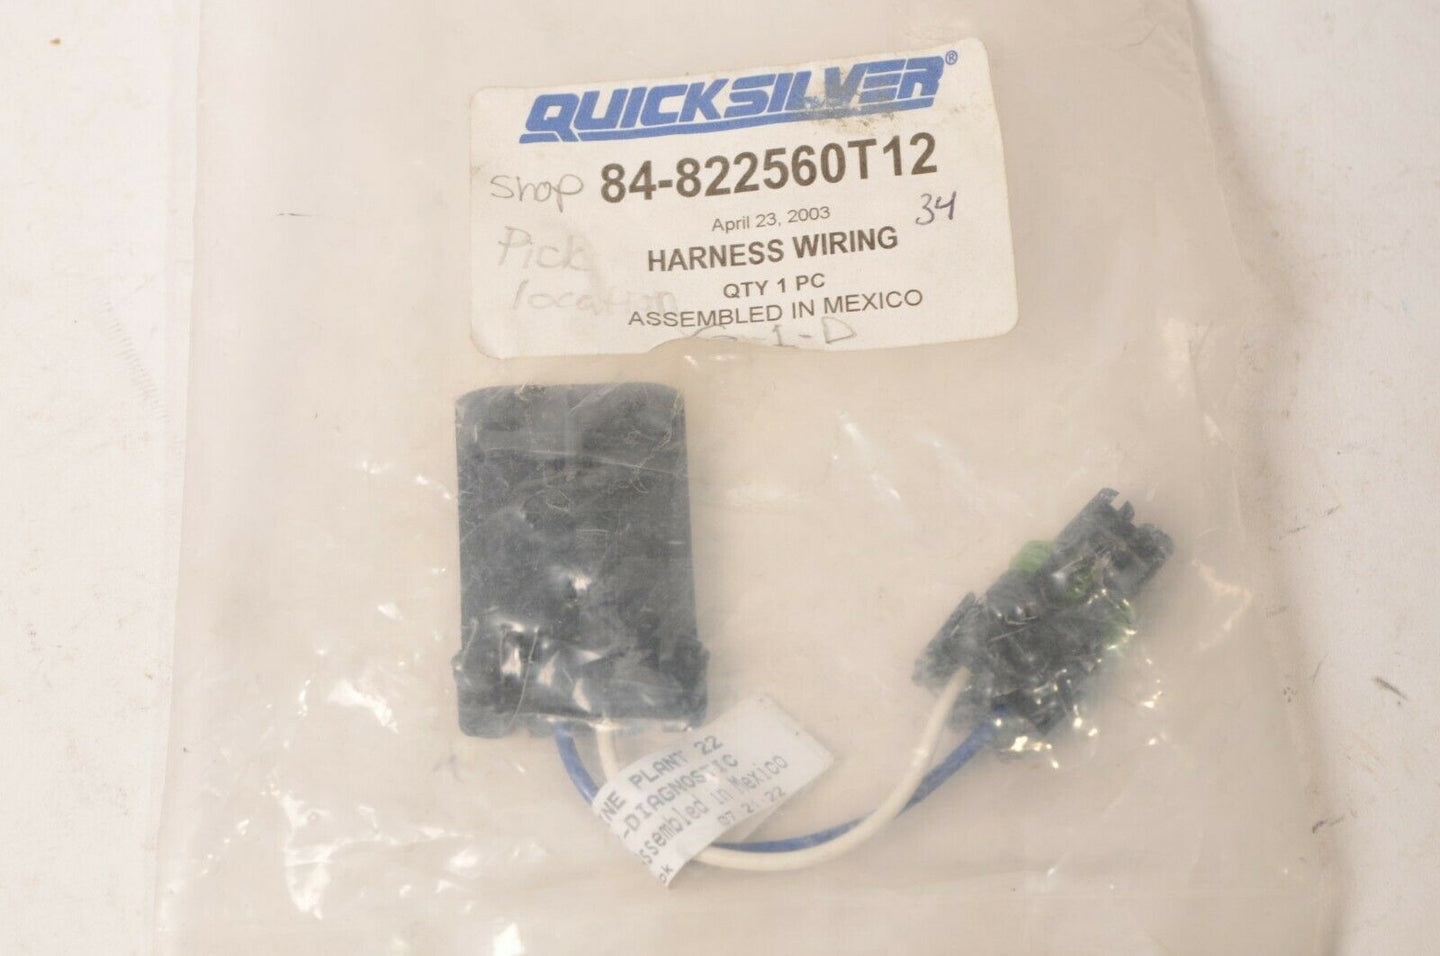 Mercury MerCruiser Quicksilver Harness for Diagnostic Tester | 91-822560T12